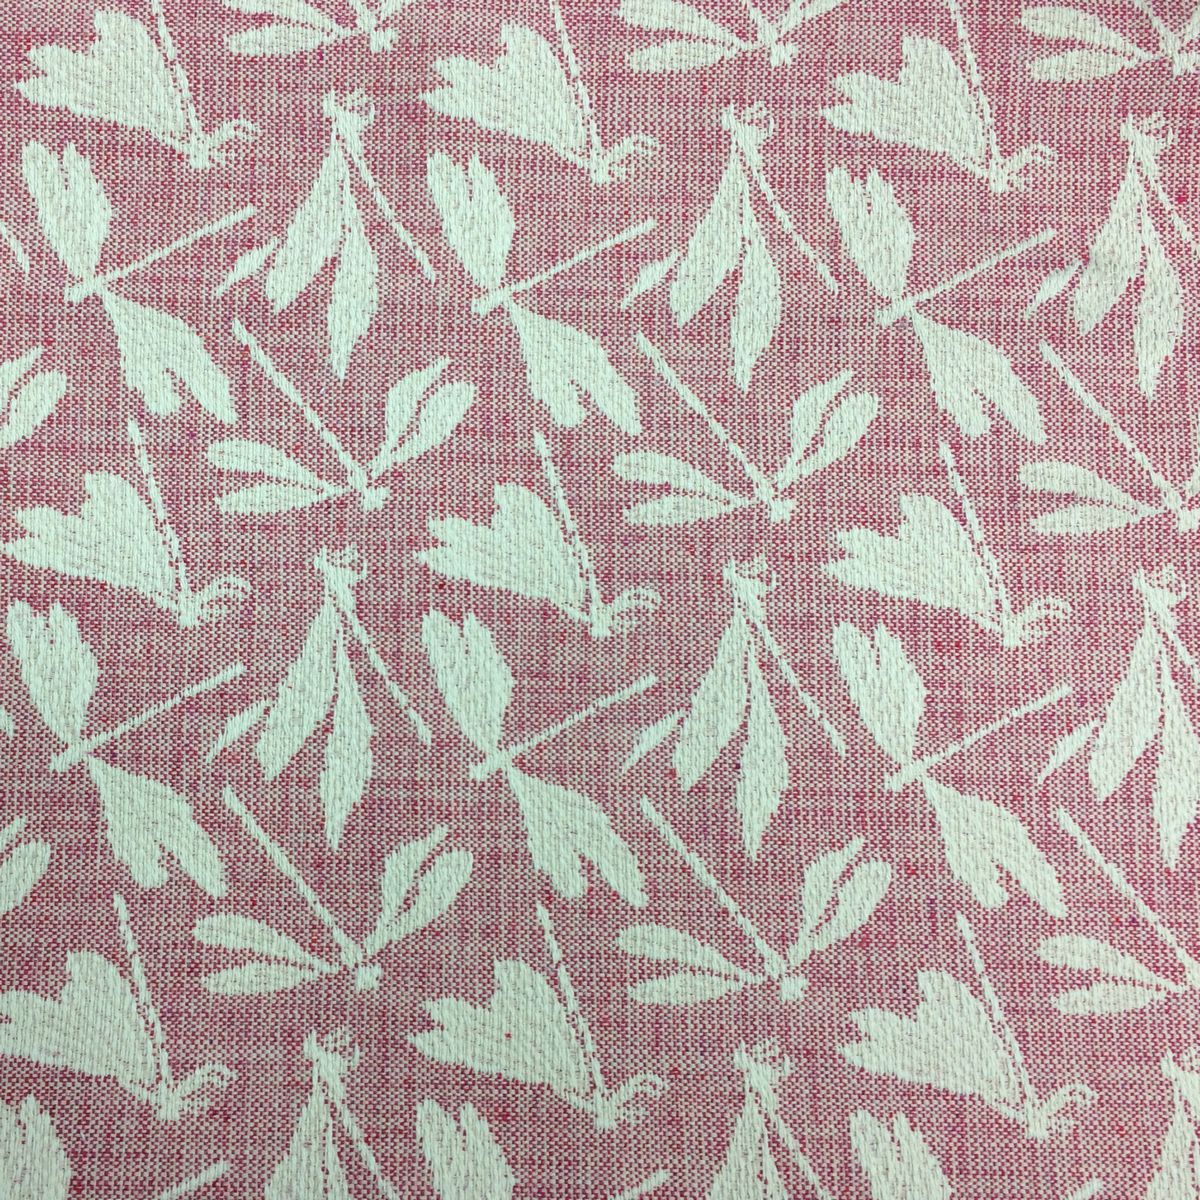 Meddon Rose Fabric by Voyage Maison